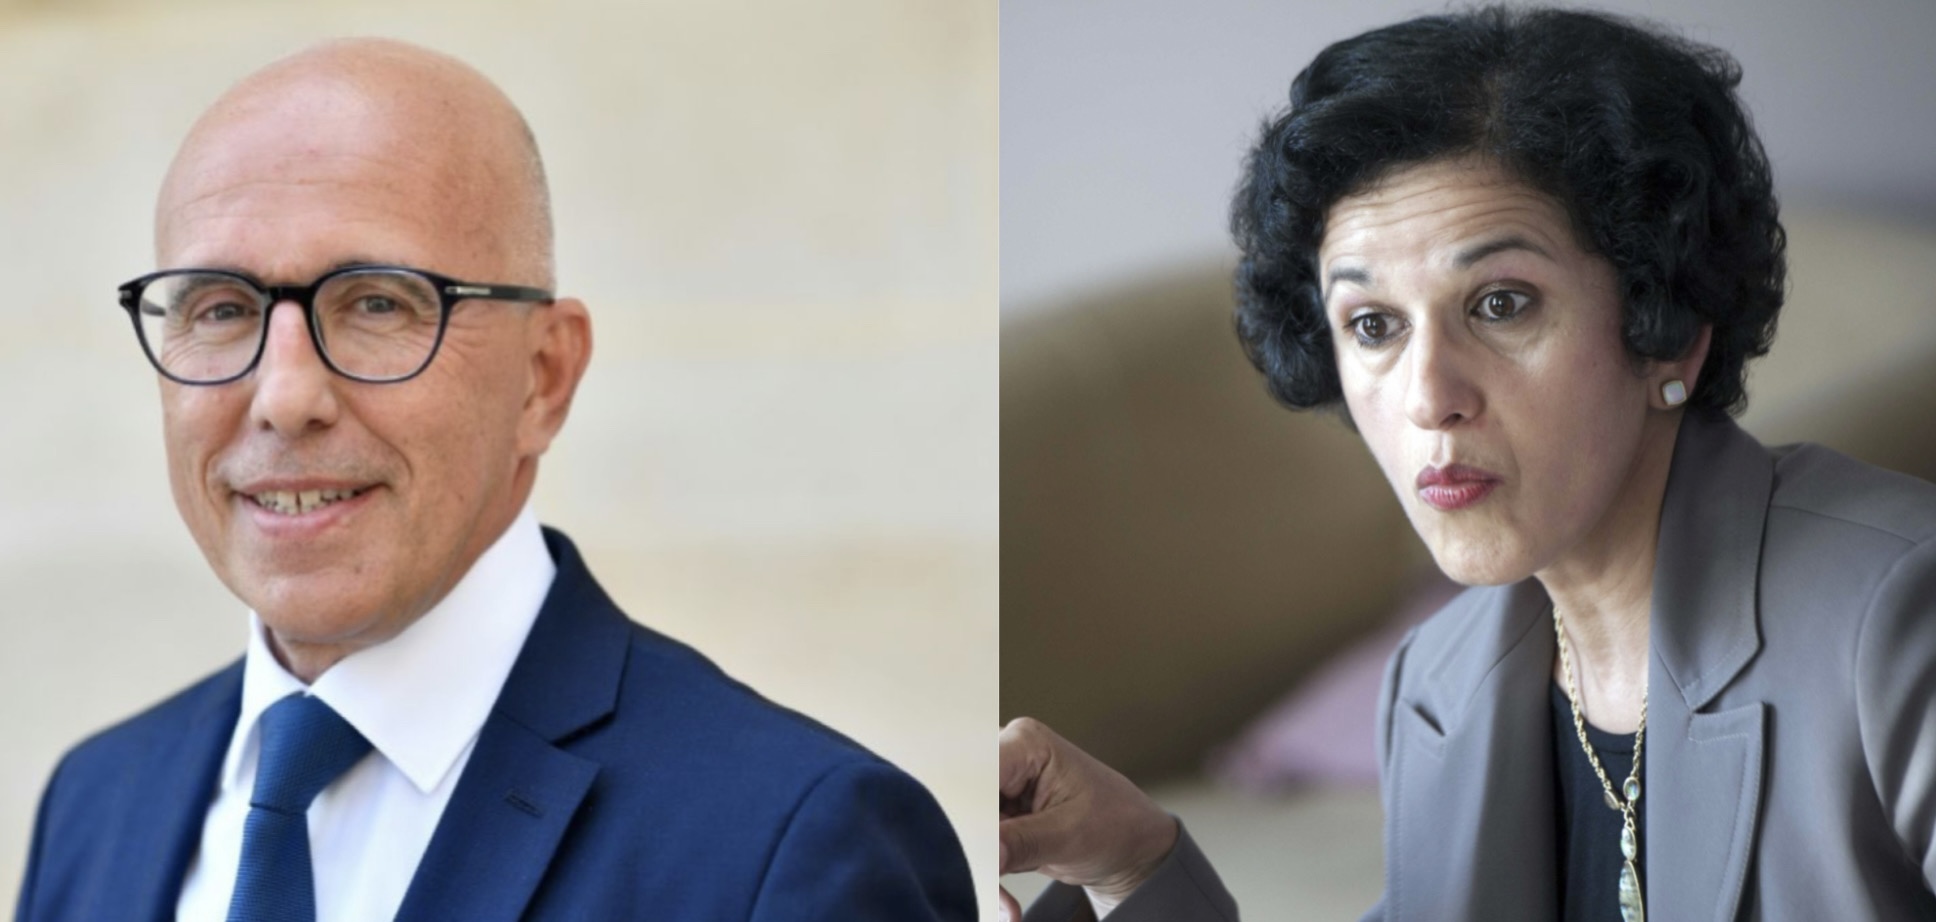 Malika Sorel accuse Éric Ciotti de racisme